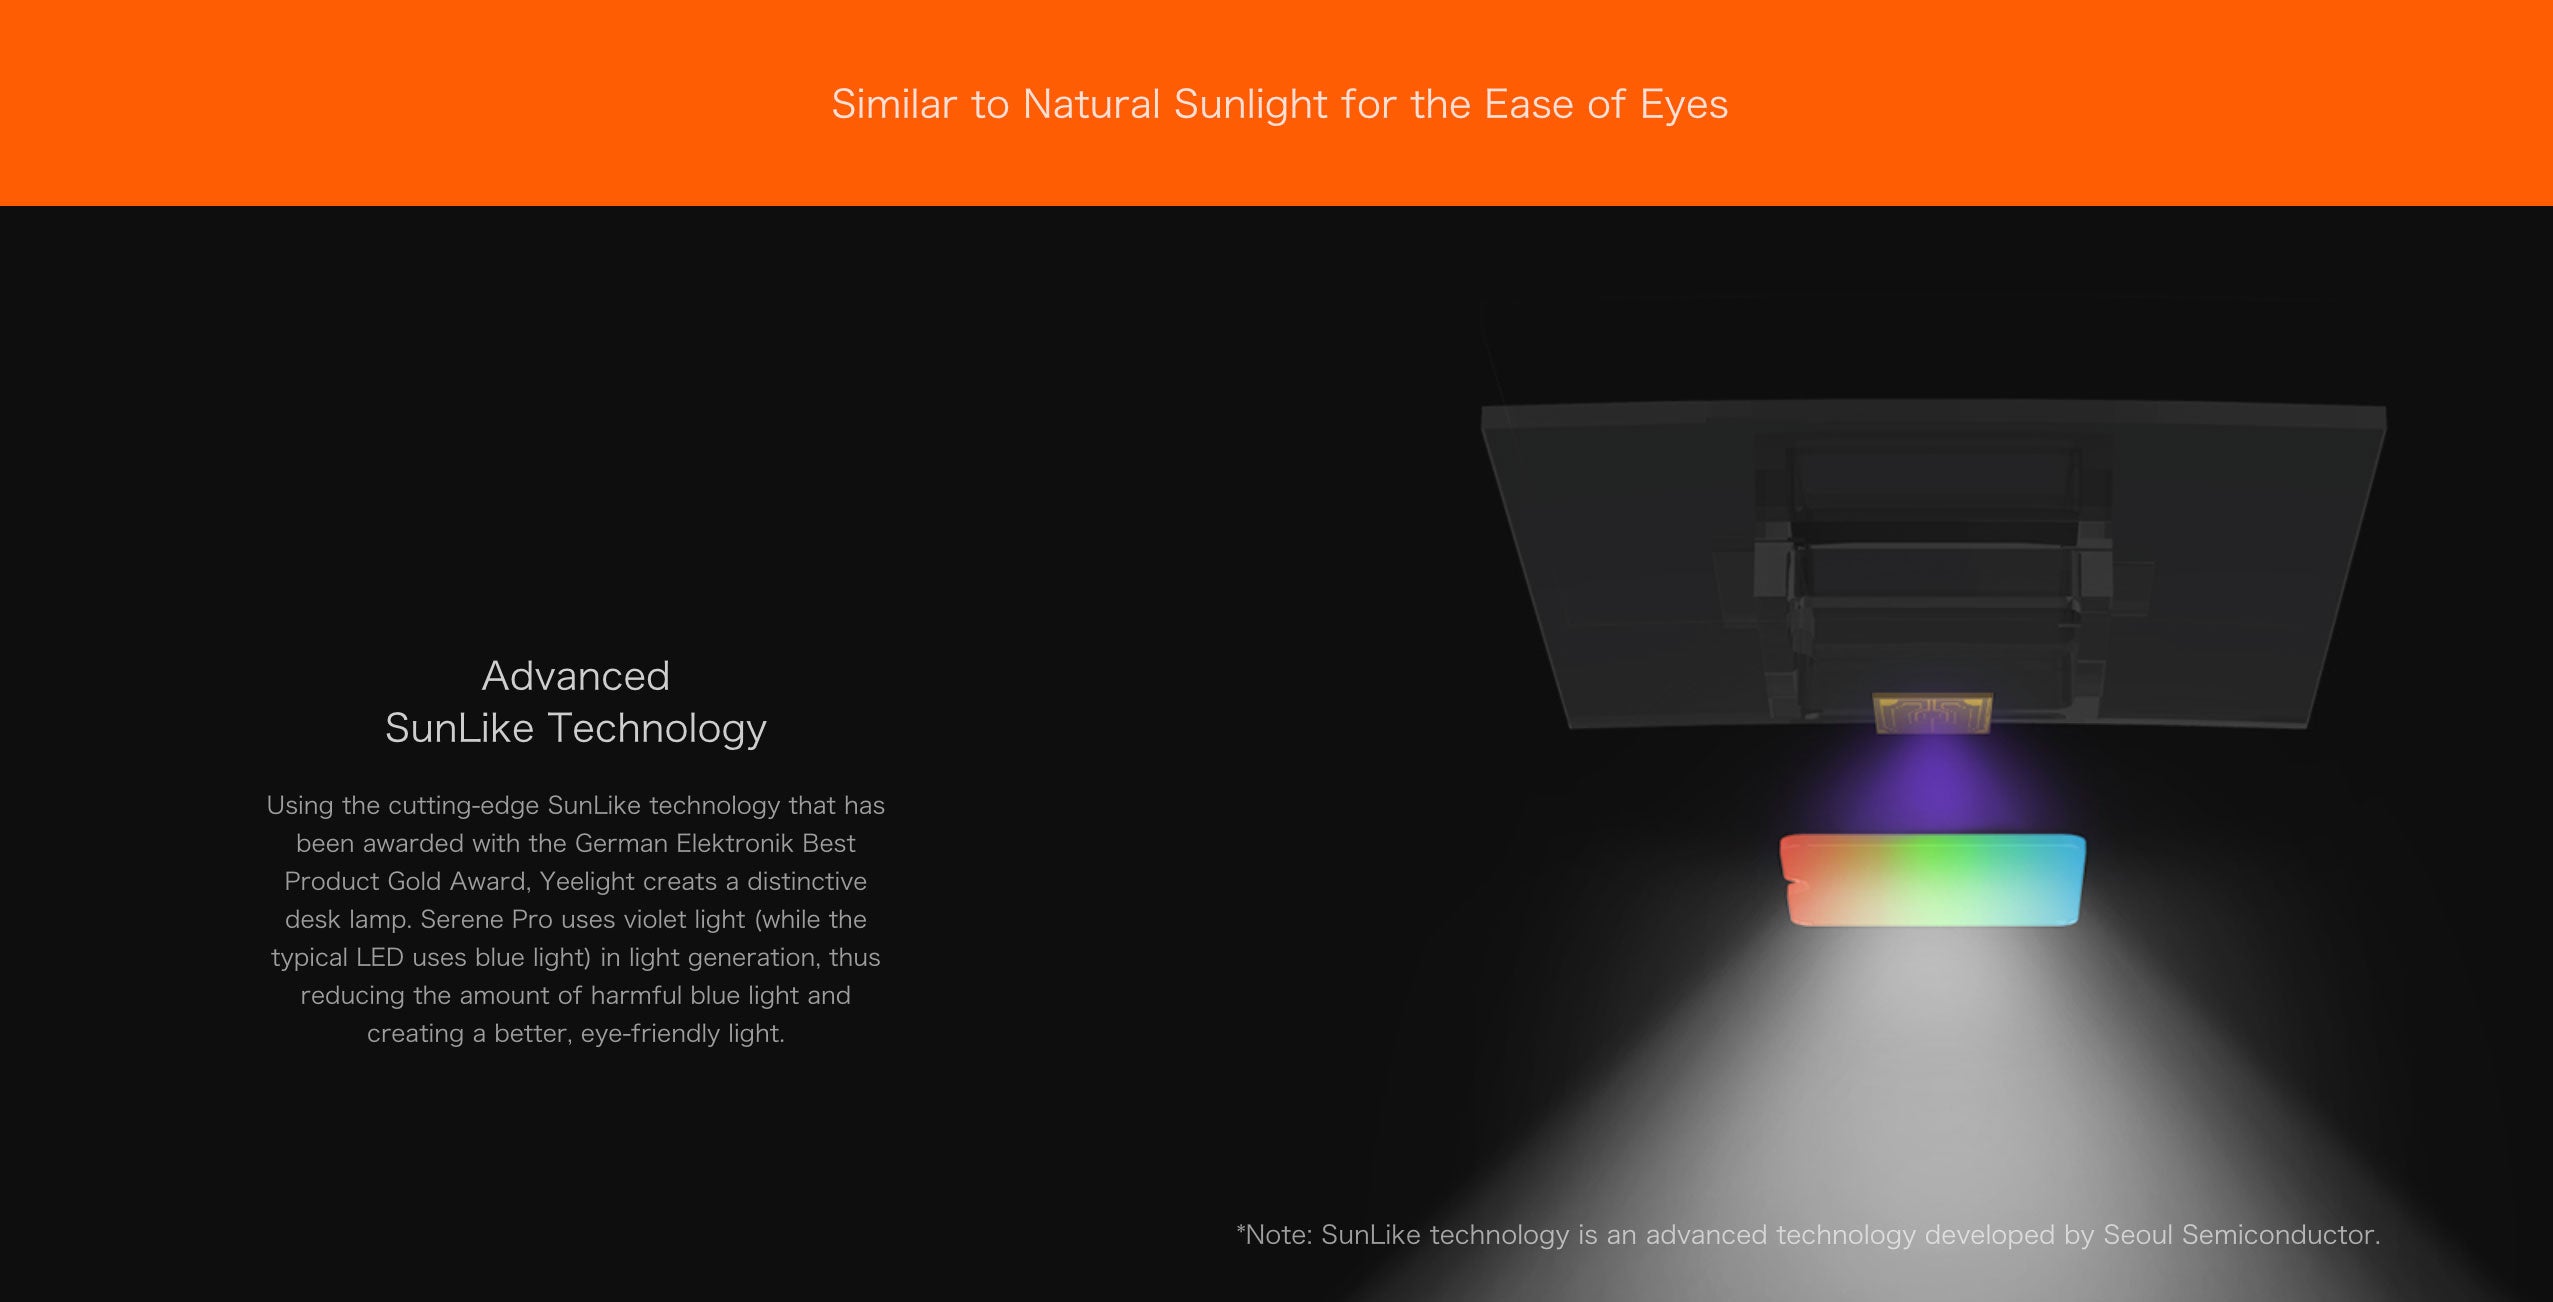 Yeelight Smart Eye Care Table Light Intelligent LED Smart Touch Control Lamp